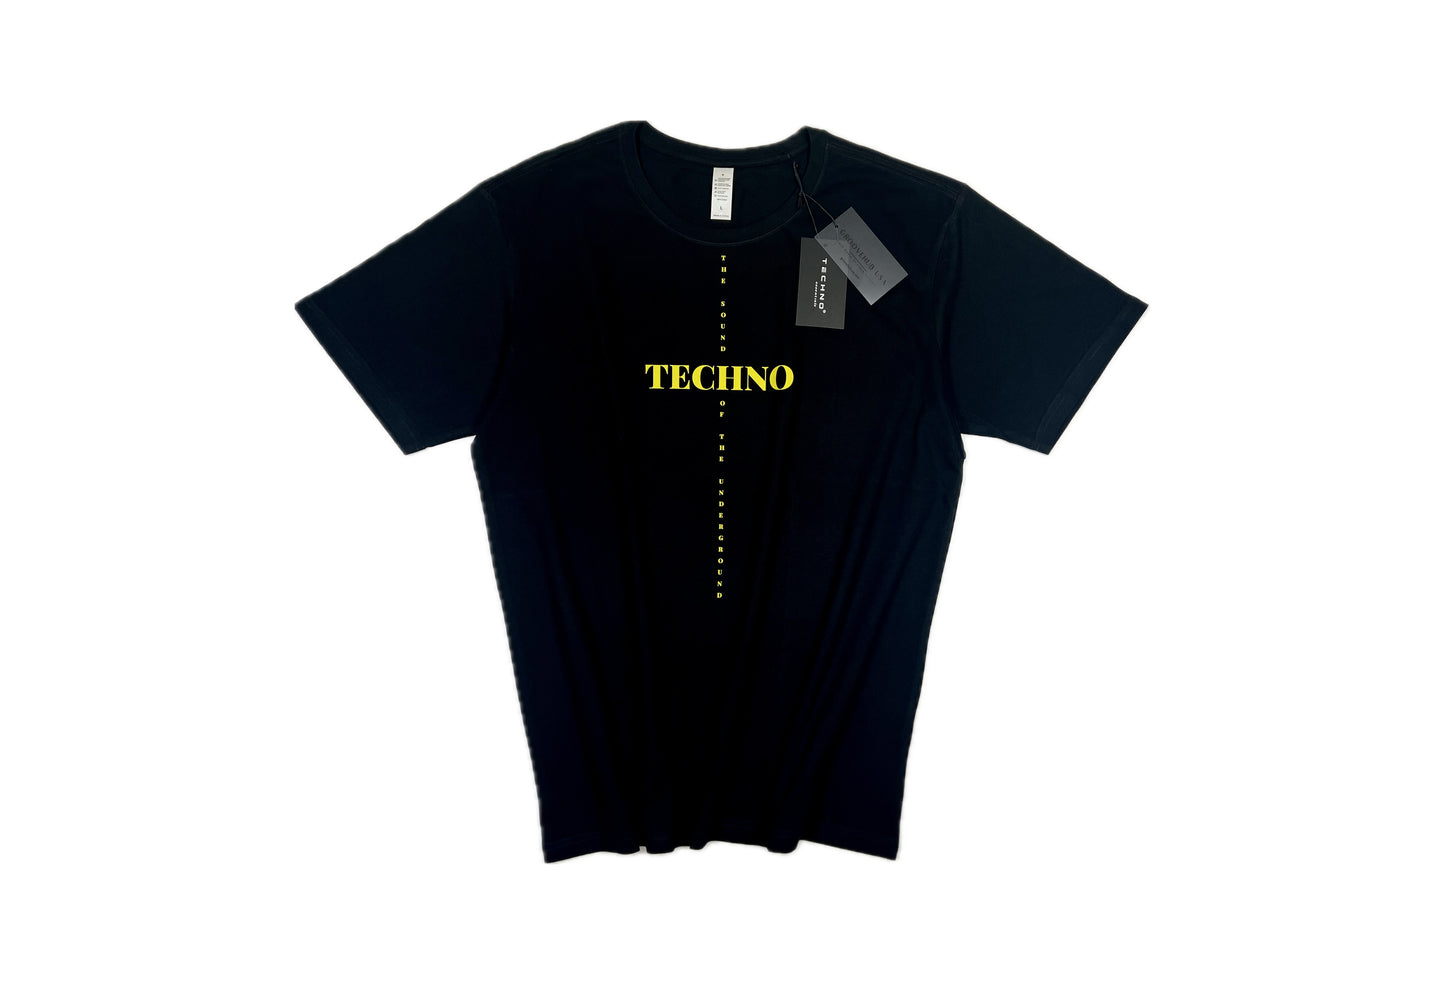 TECHNO essentials Mens Premium Quality 100% Cotton T-Shirt Slim Fit Casual Festival Clubwear